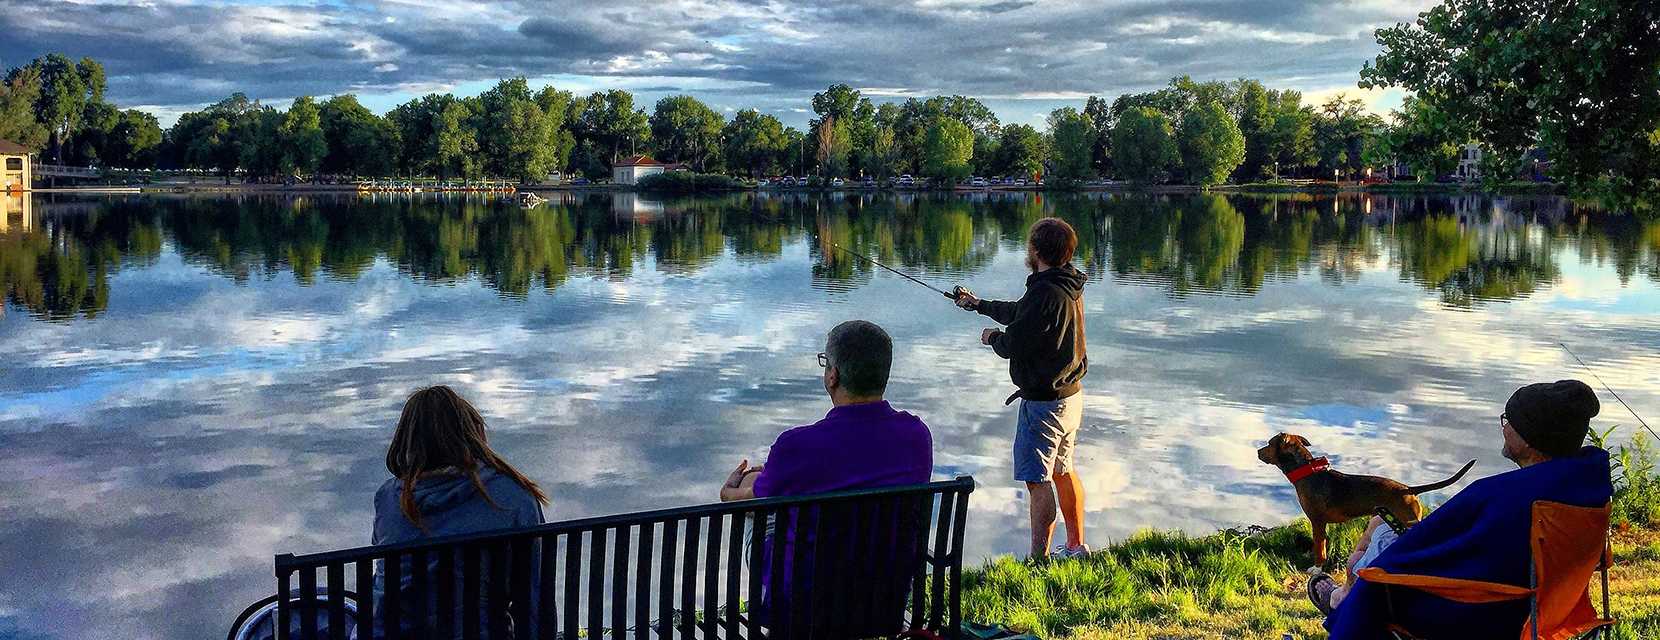 Man fishing in Denver's Washington Park